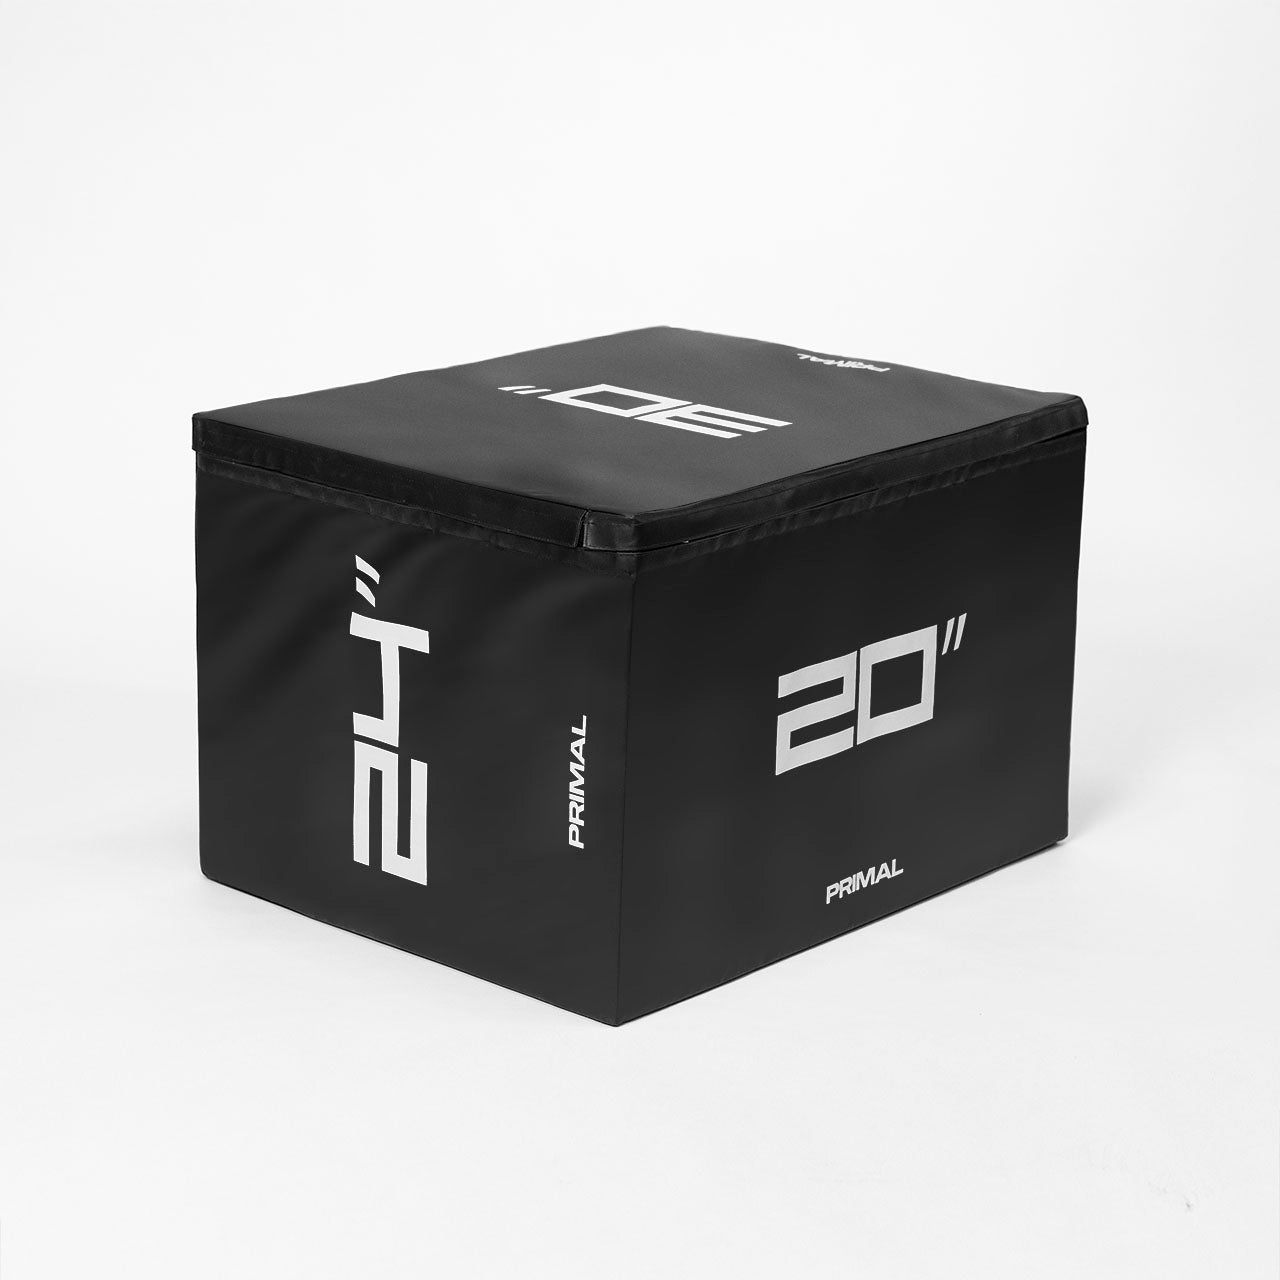 Primal Performance Series 3-in-1 Soft Plyo Box - EX DEMO